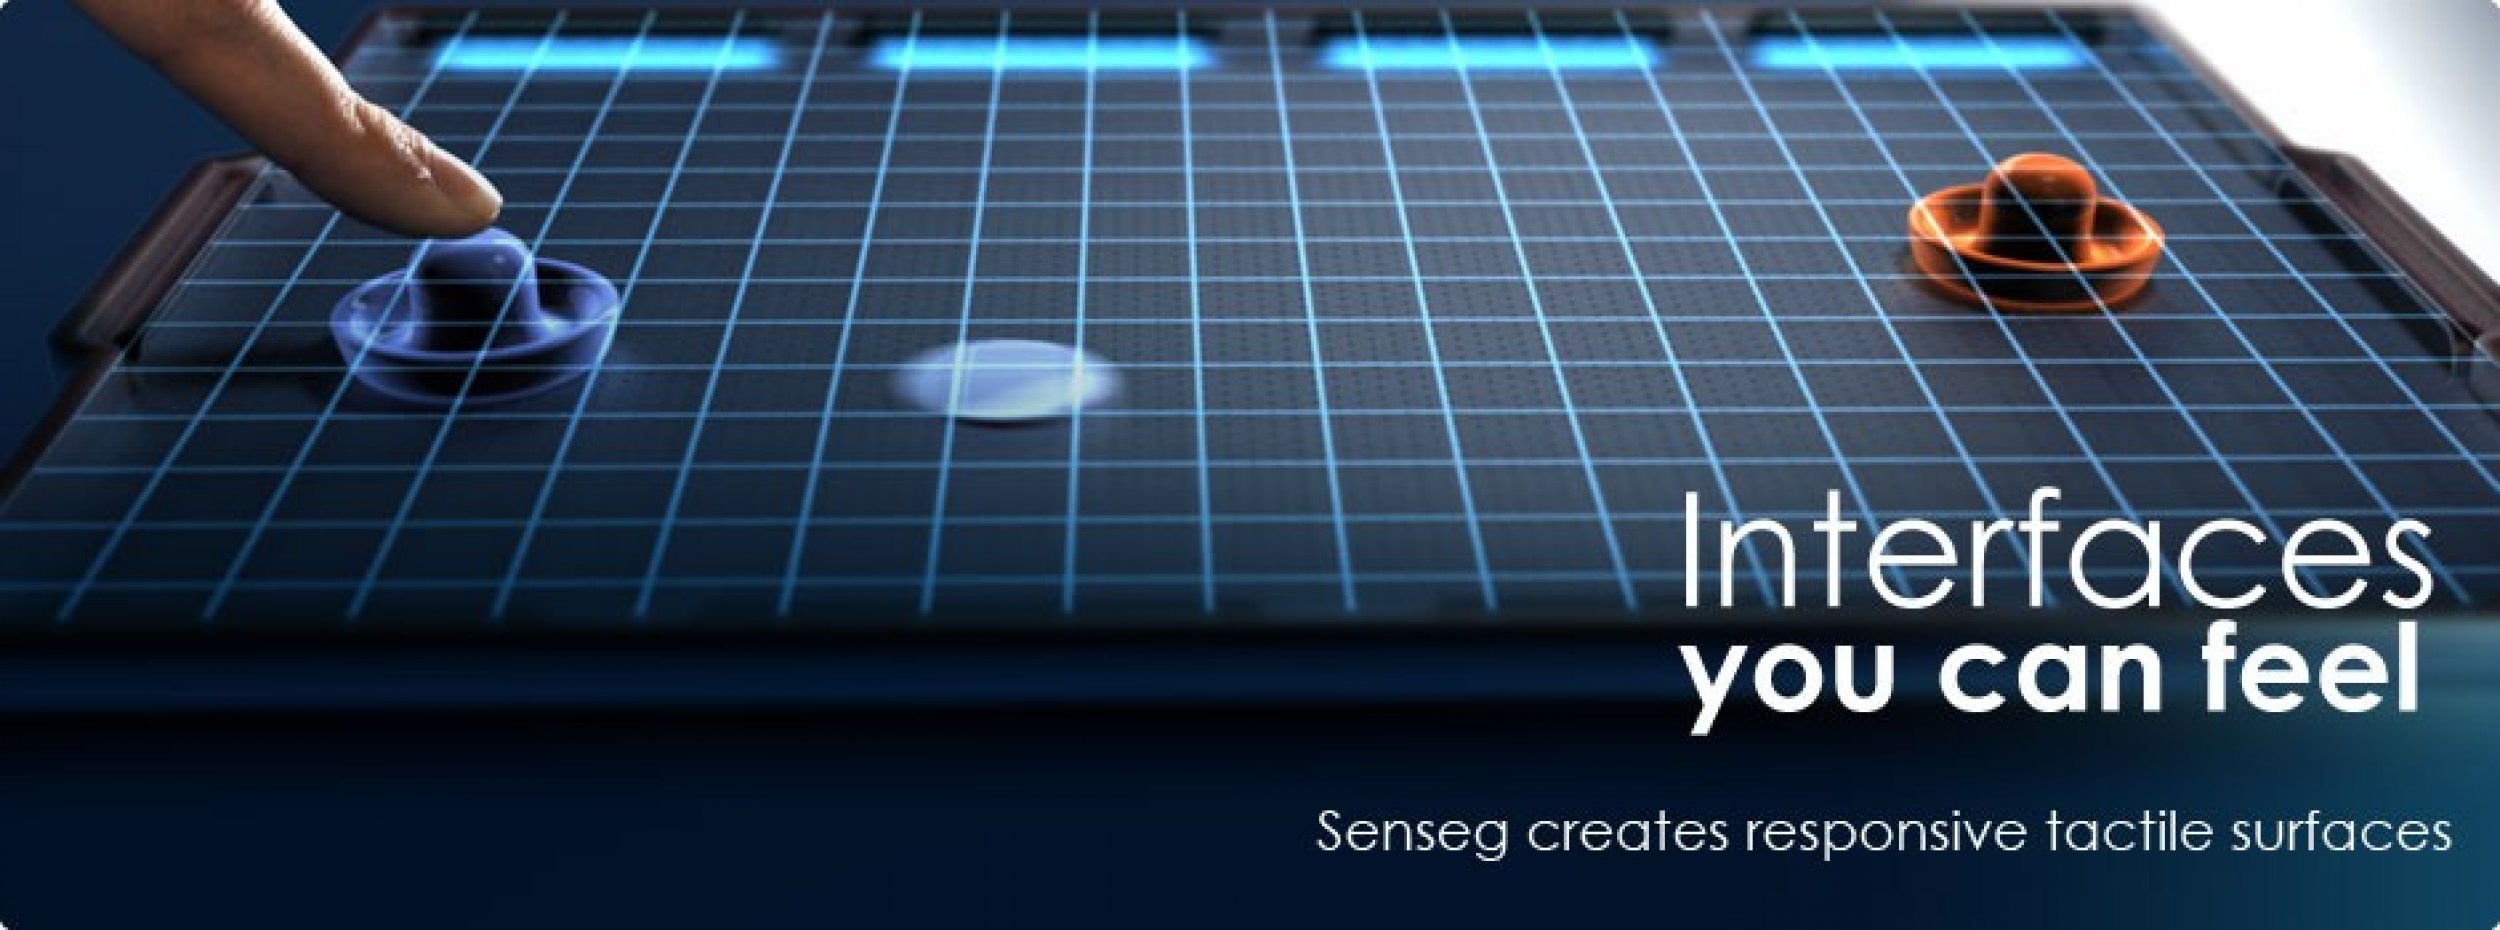 Senseg Interface Technology